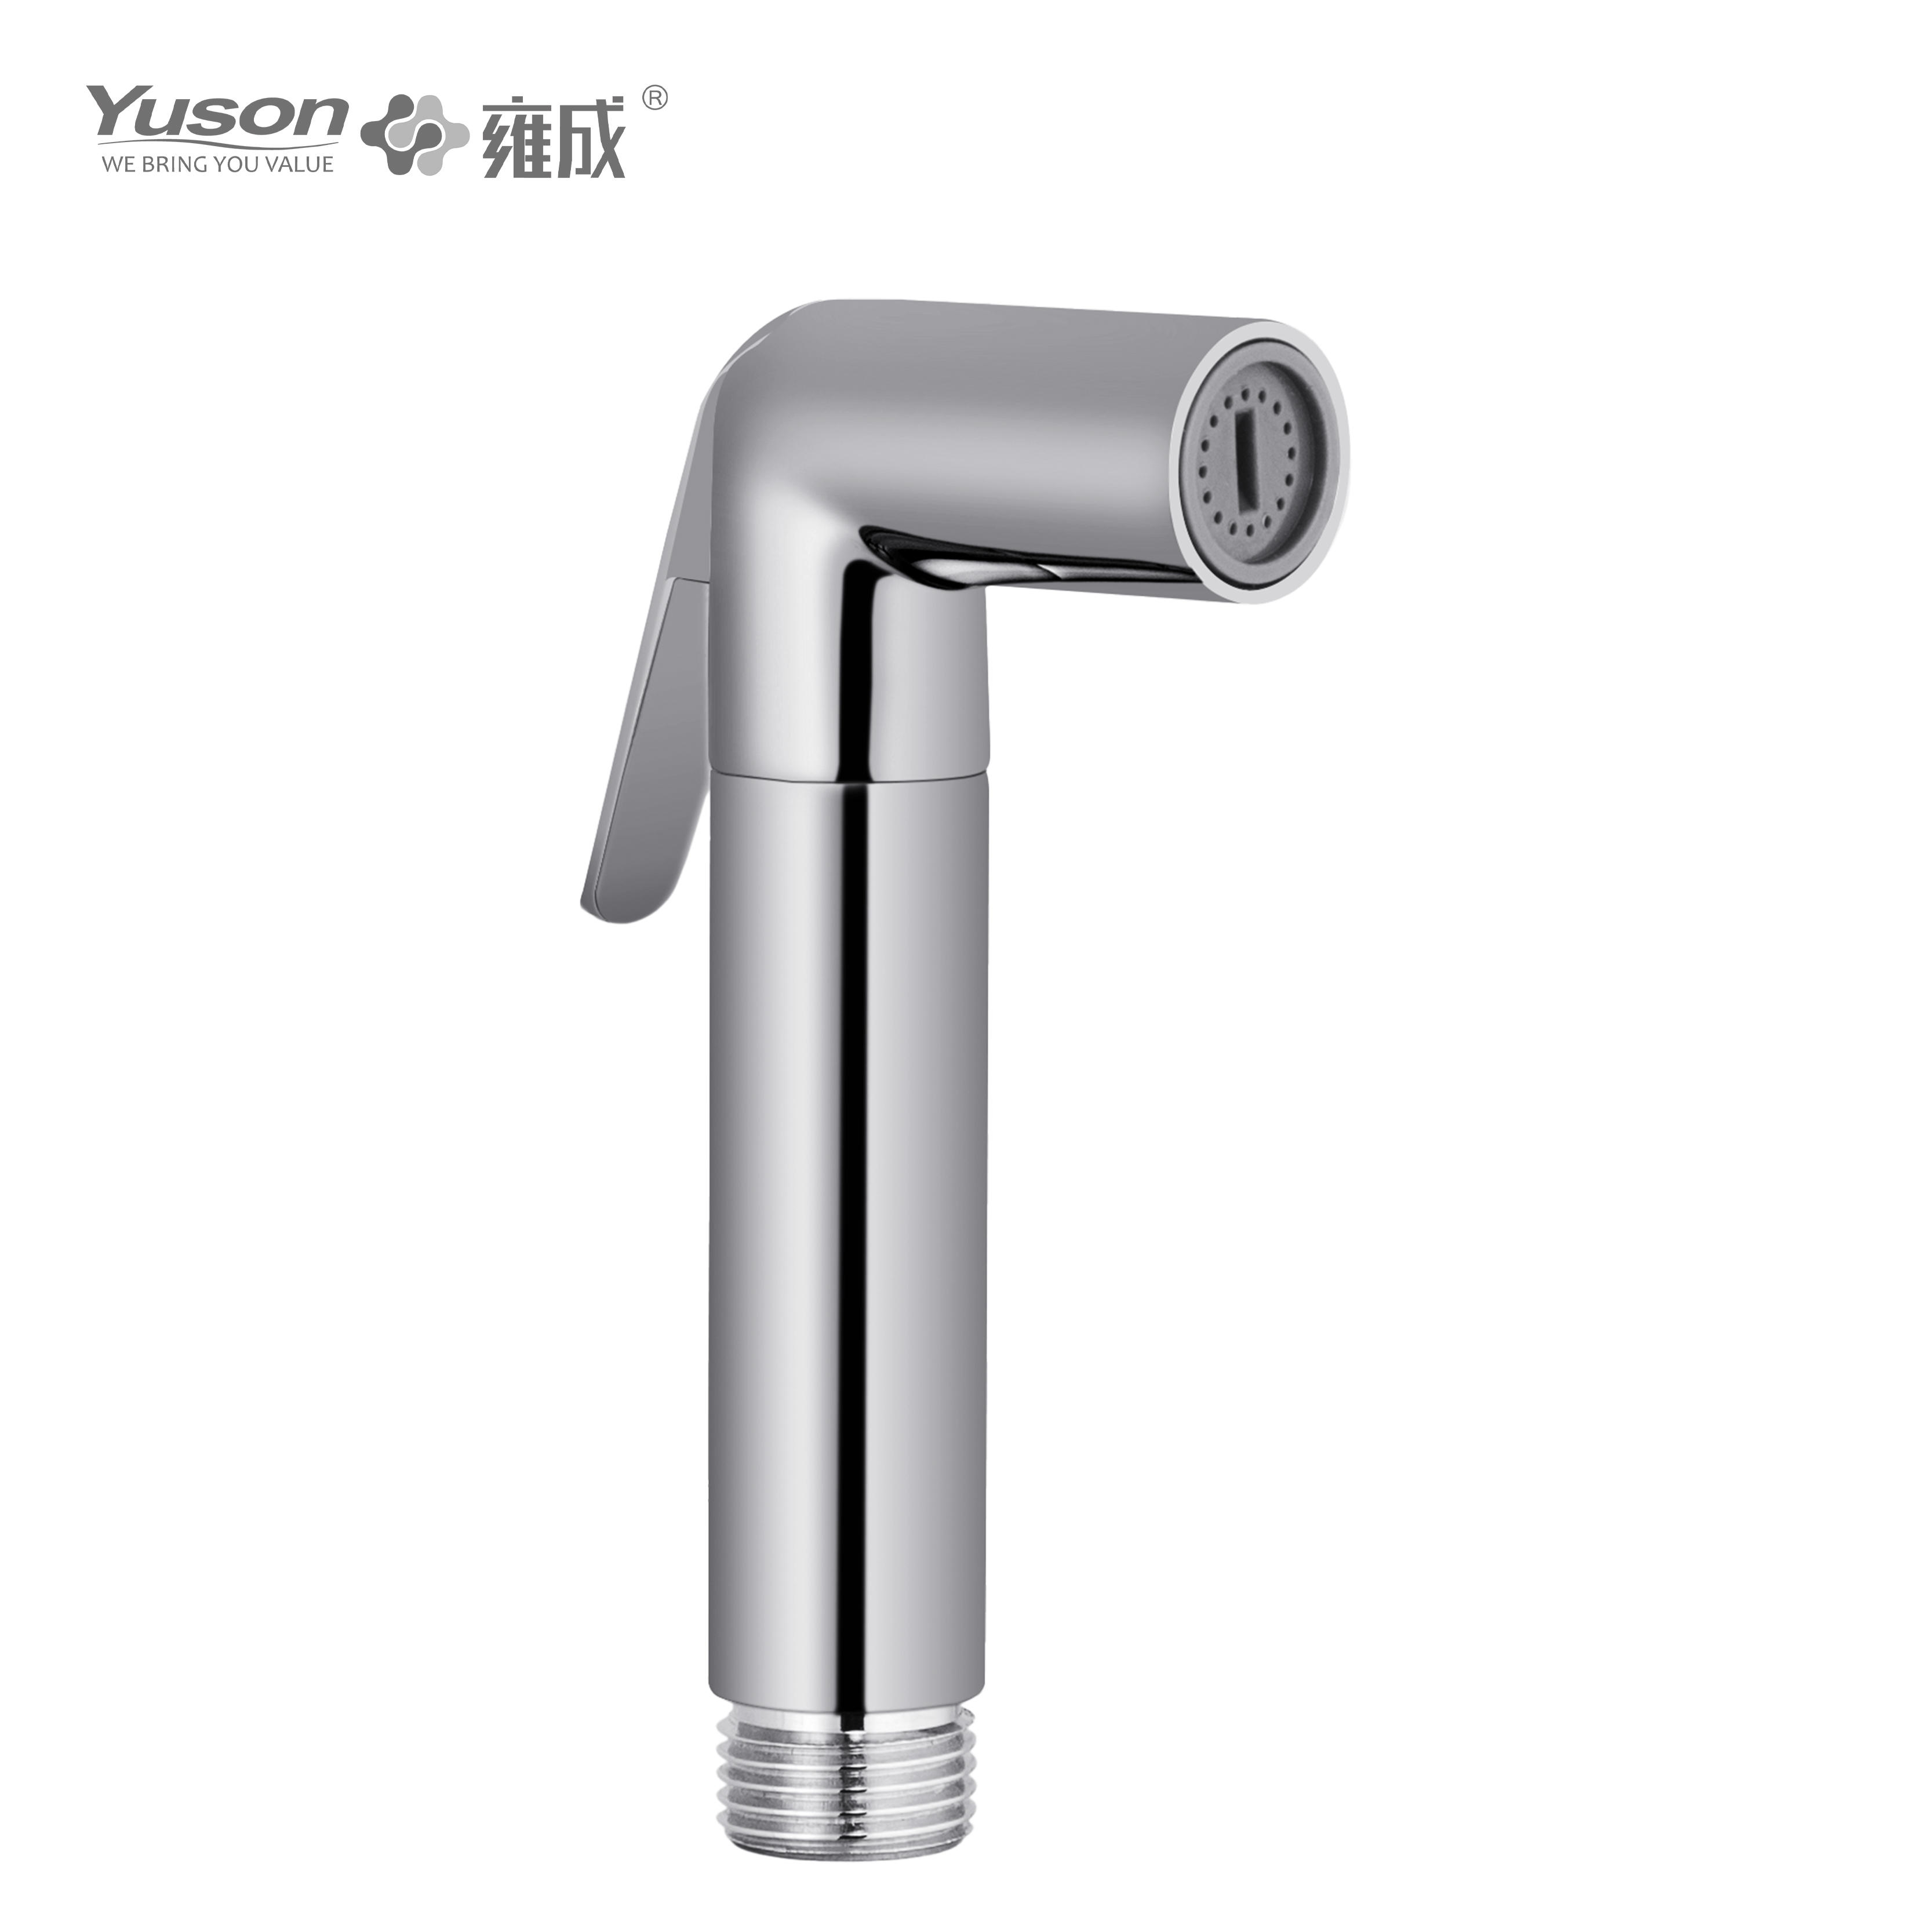 YS36415	Full Brass Handheld Toilet hygiene sprayer, Portable bidet Personal Cleansing Sprayer